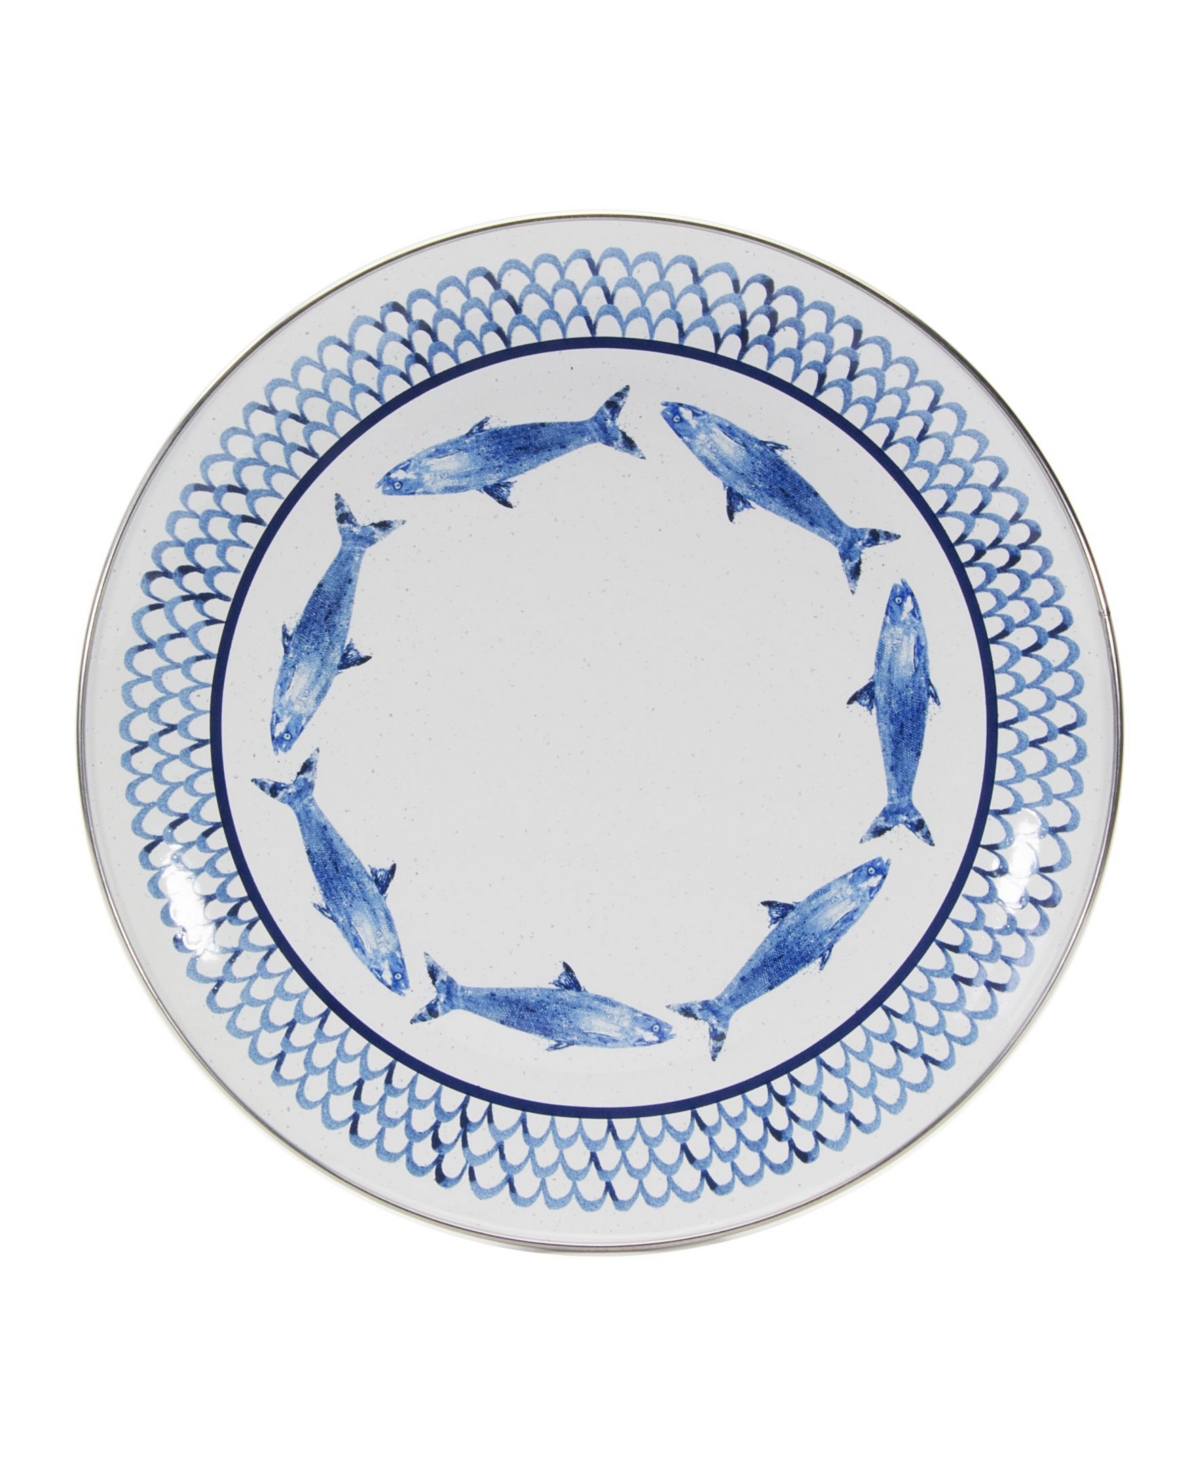 Fish Camp Enamelware Dinner Plates, Set of 4 - Blue